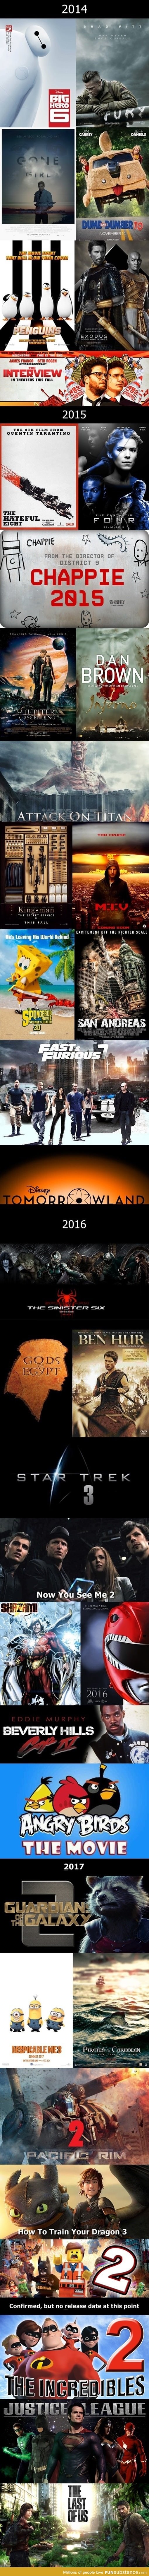 Movies Coming Soon 2014-2017